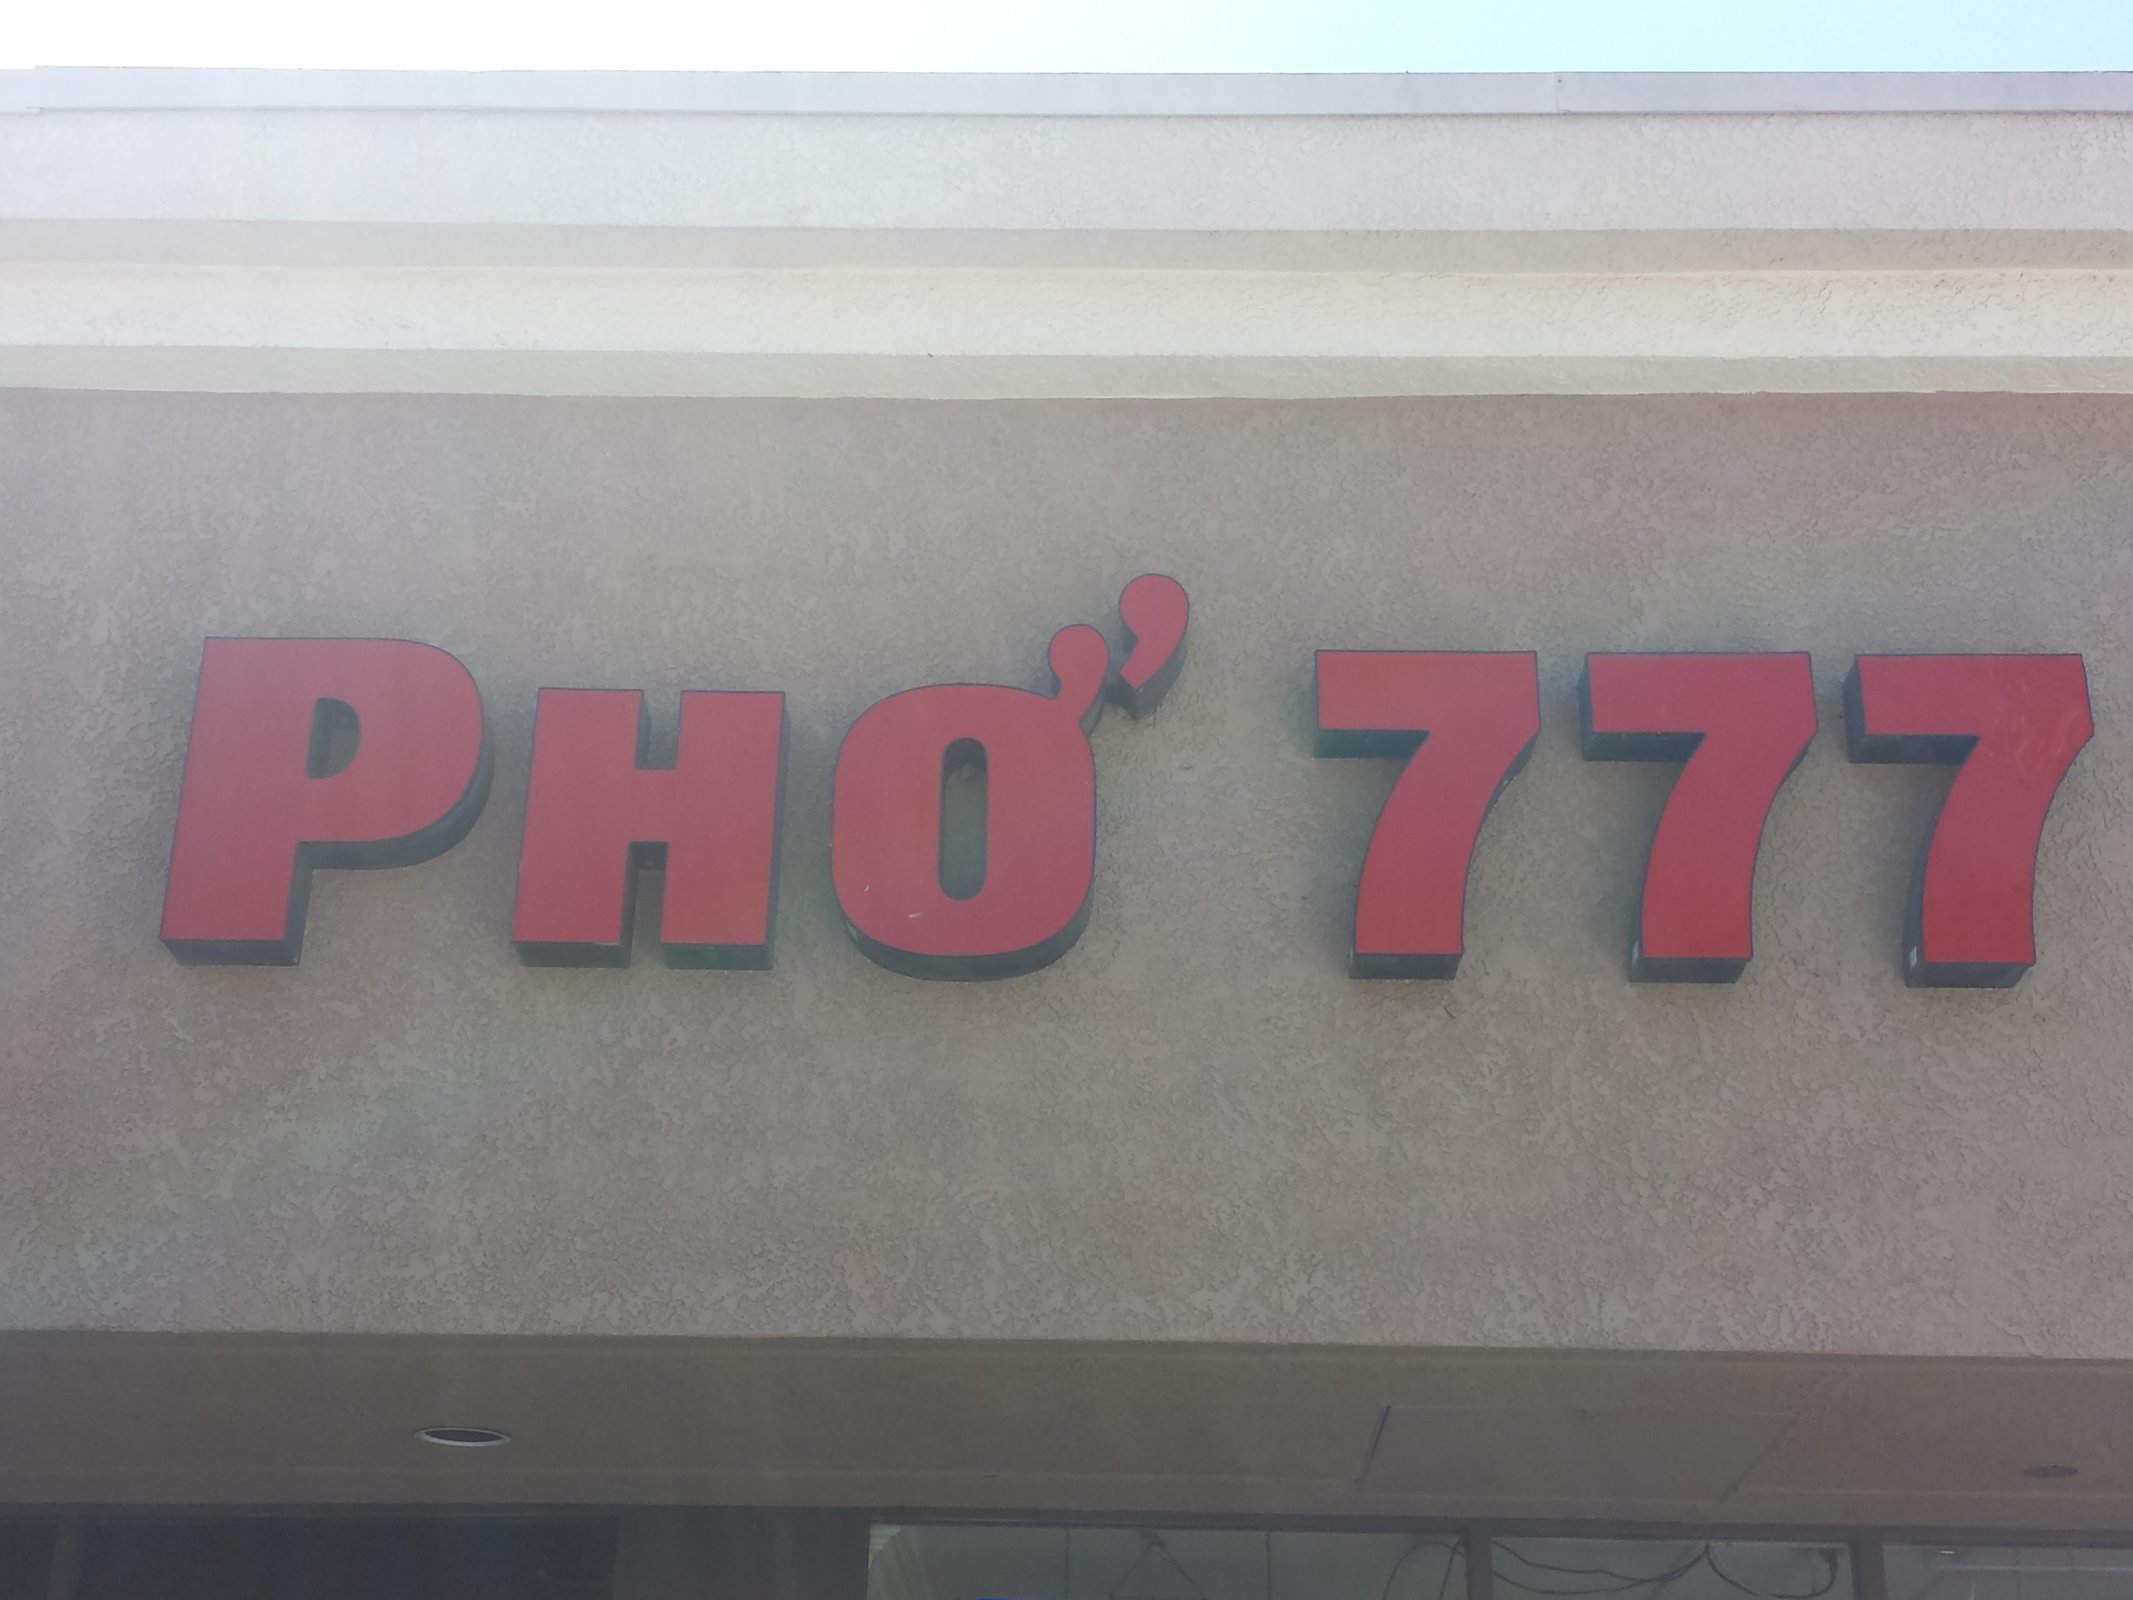 Pho 777